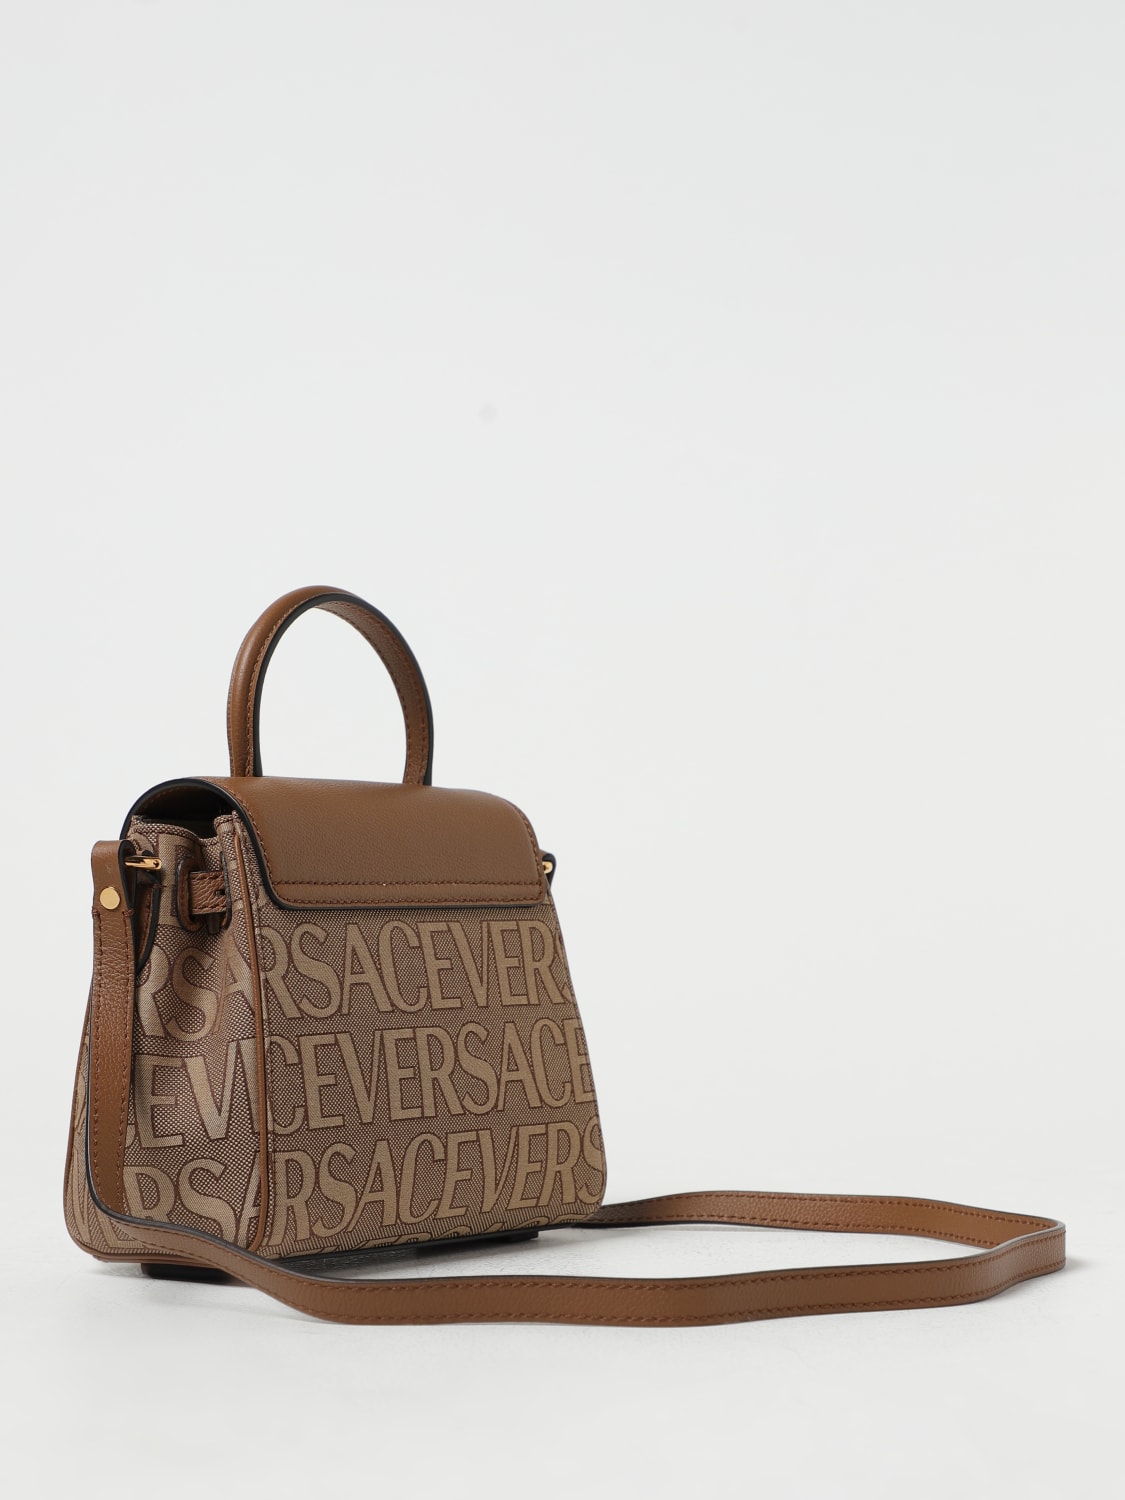 Versace - Women's Mini La Medusa Pocket Crossbody Bag Shoulder Bag - Black - Leather